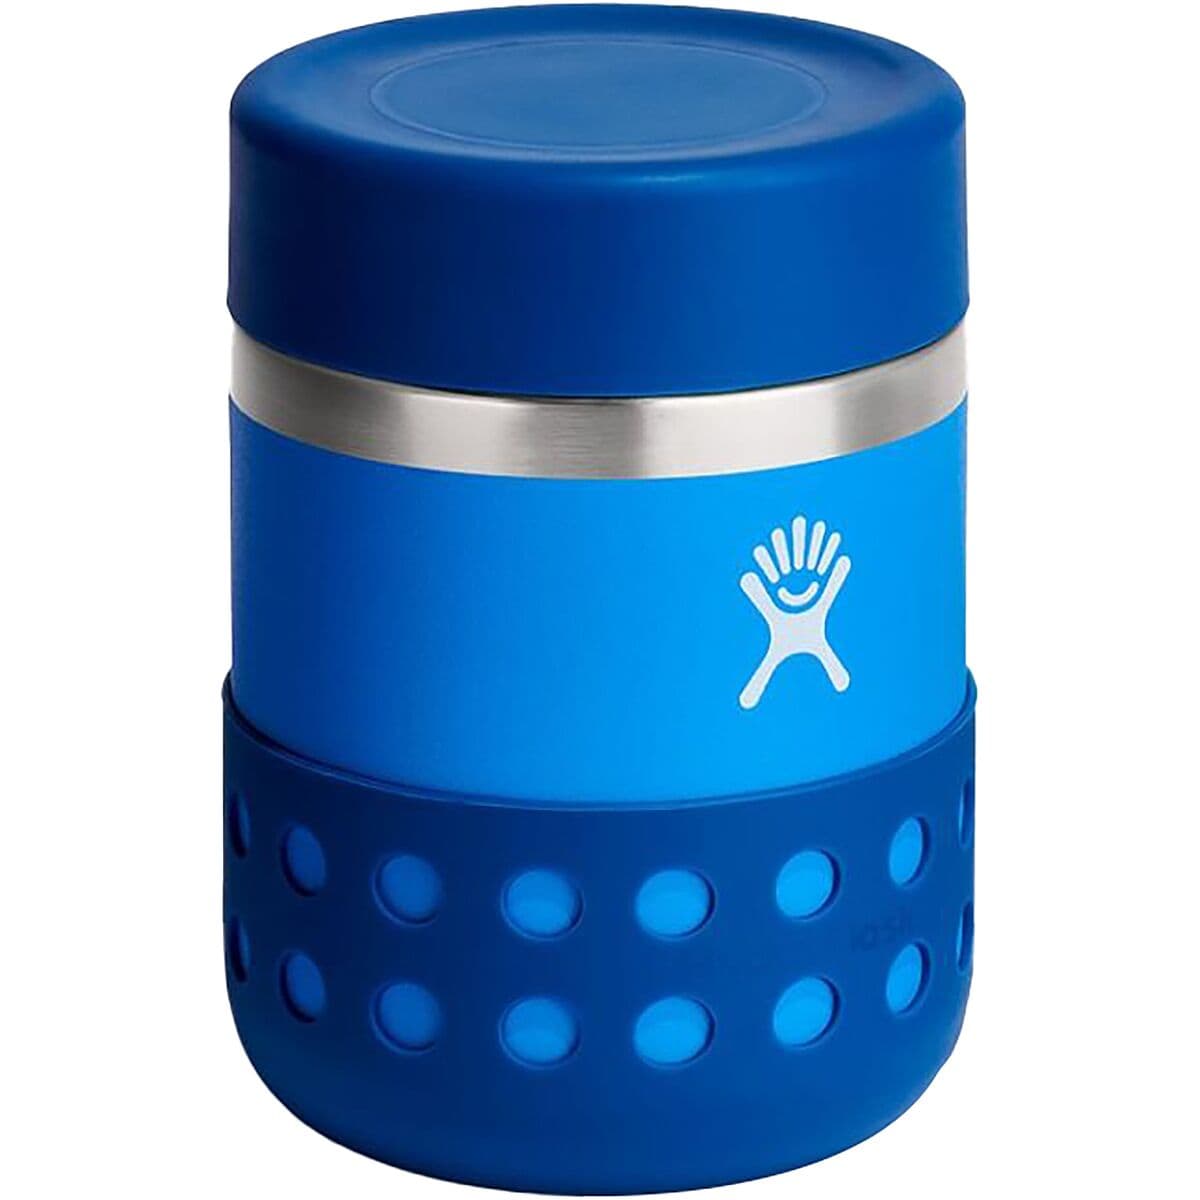 Hydro Flask 12 oz. Kids' Insulated Food Jar, Honeydew